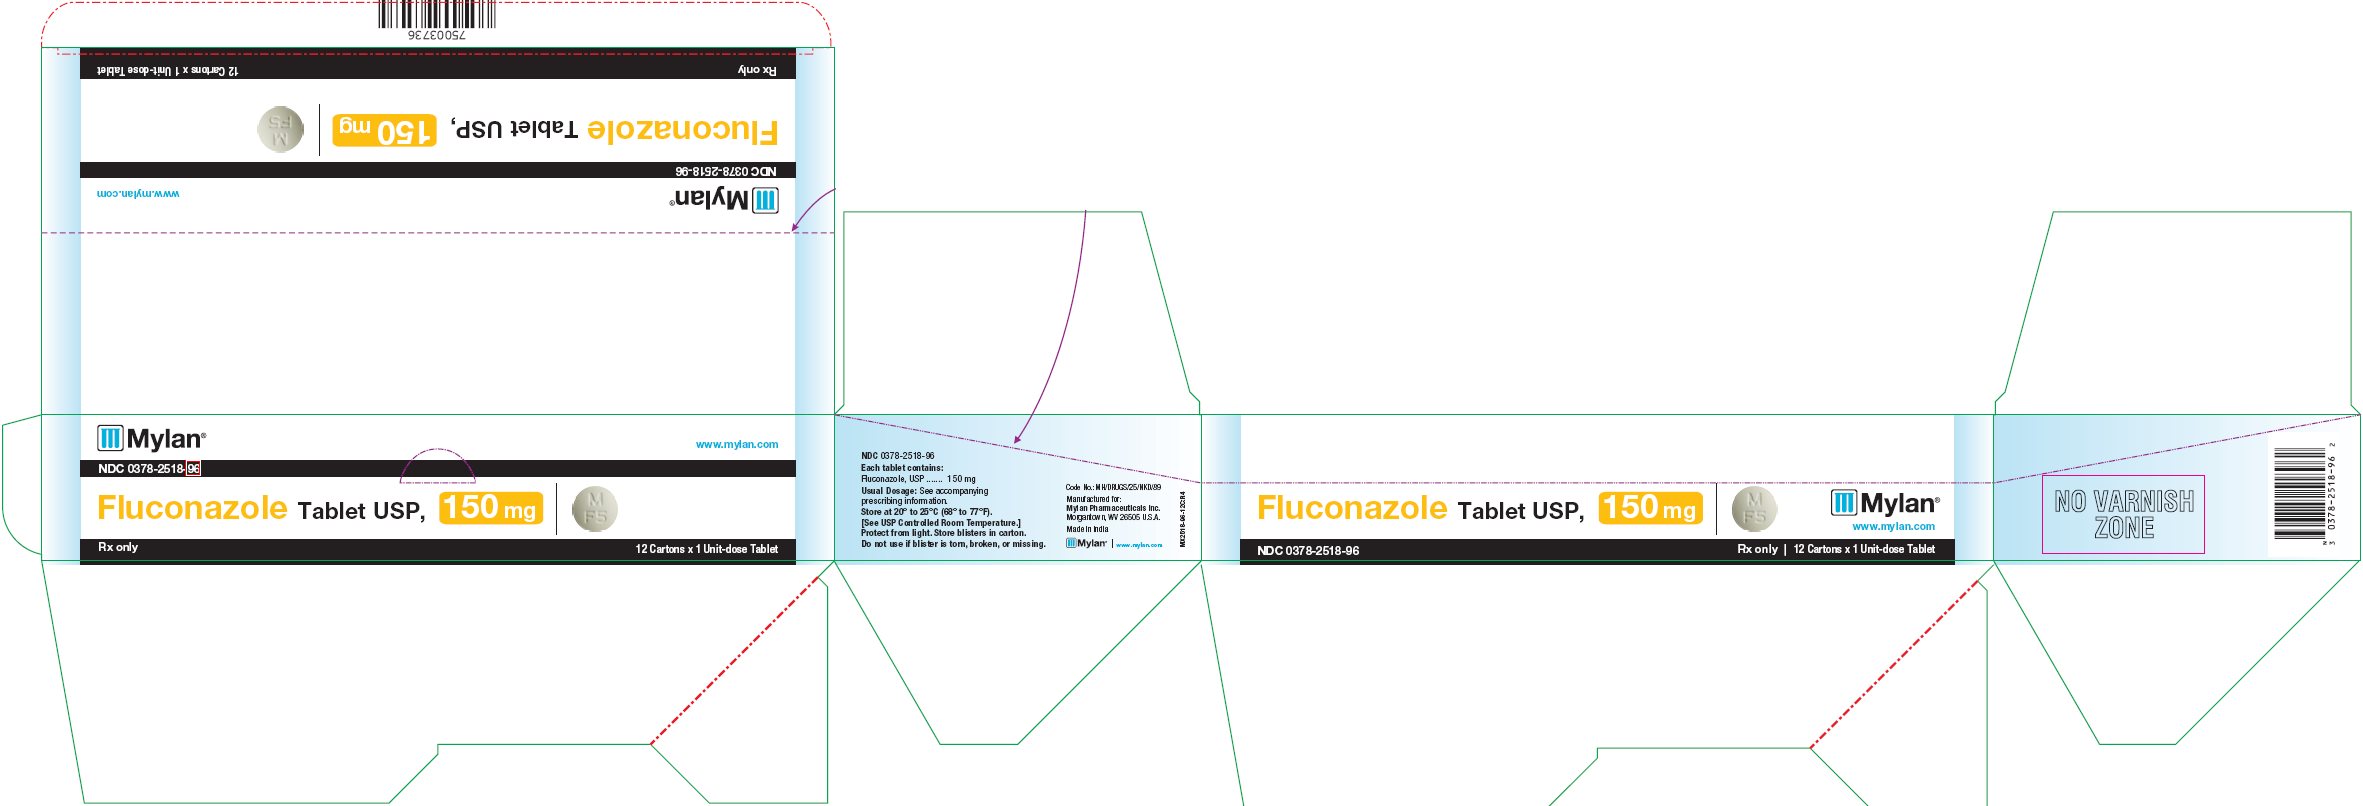 Fluconazole Tablets, USP 150 mg Carton Label